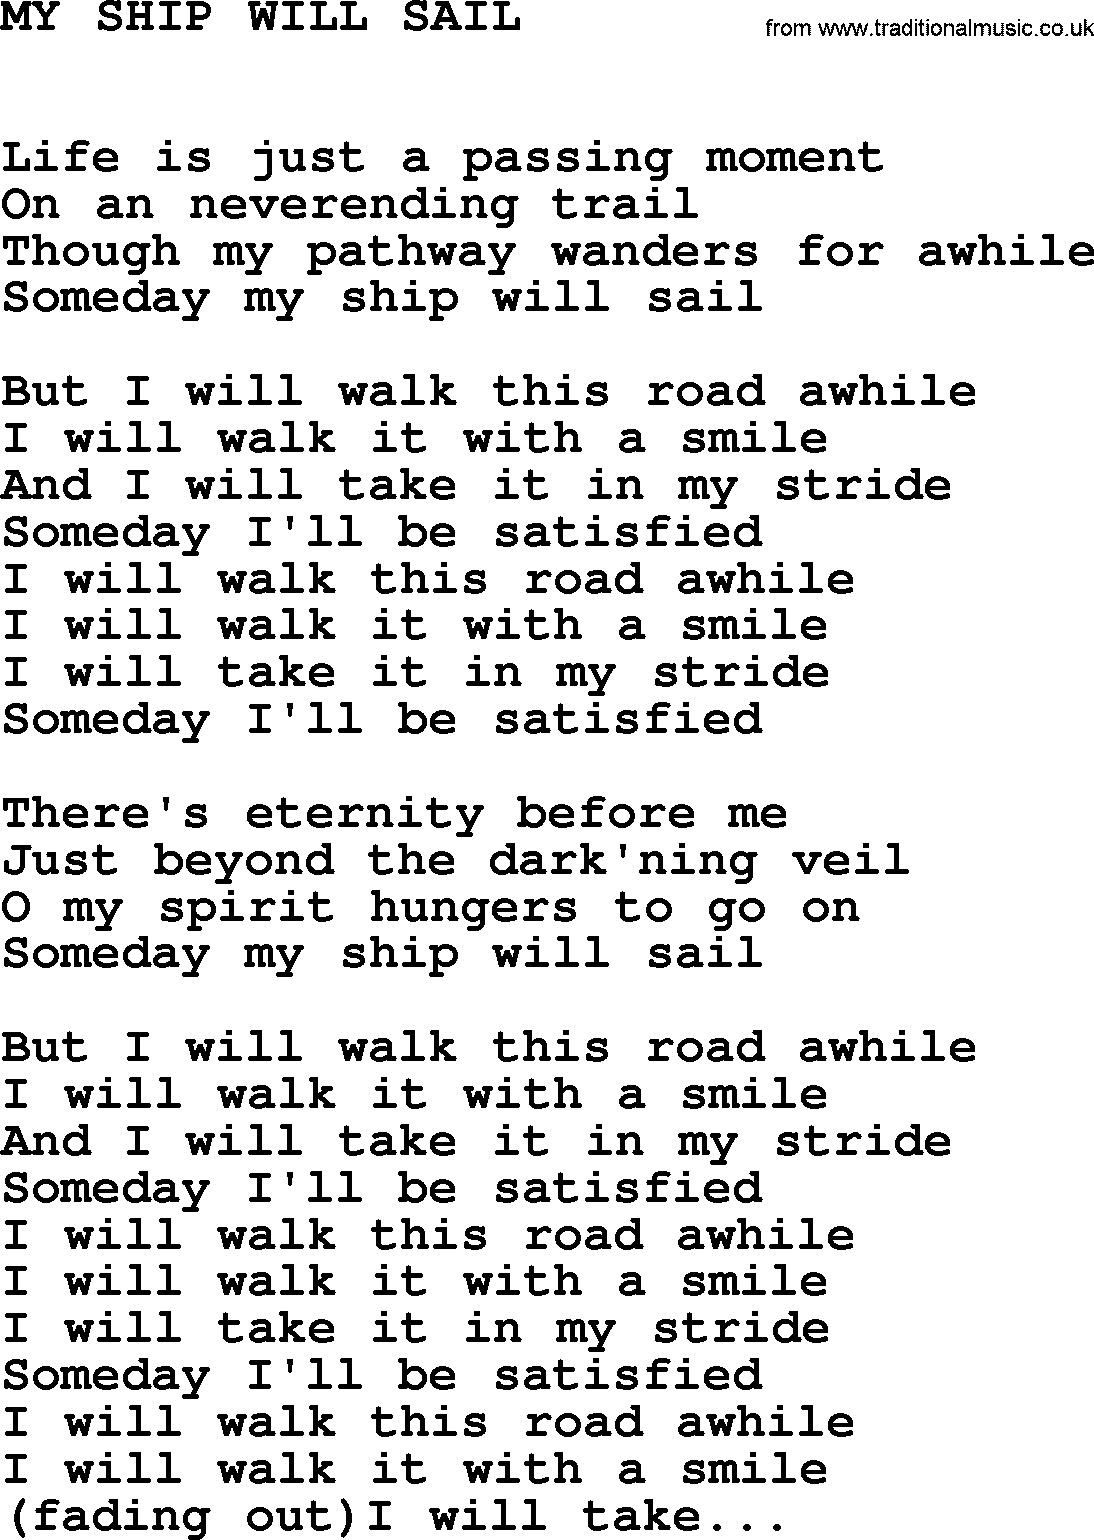 Johnny Cash song My Ship Will Sail.txt lyrics